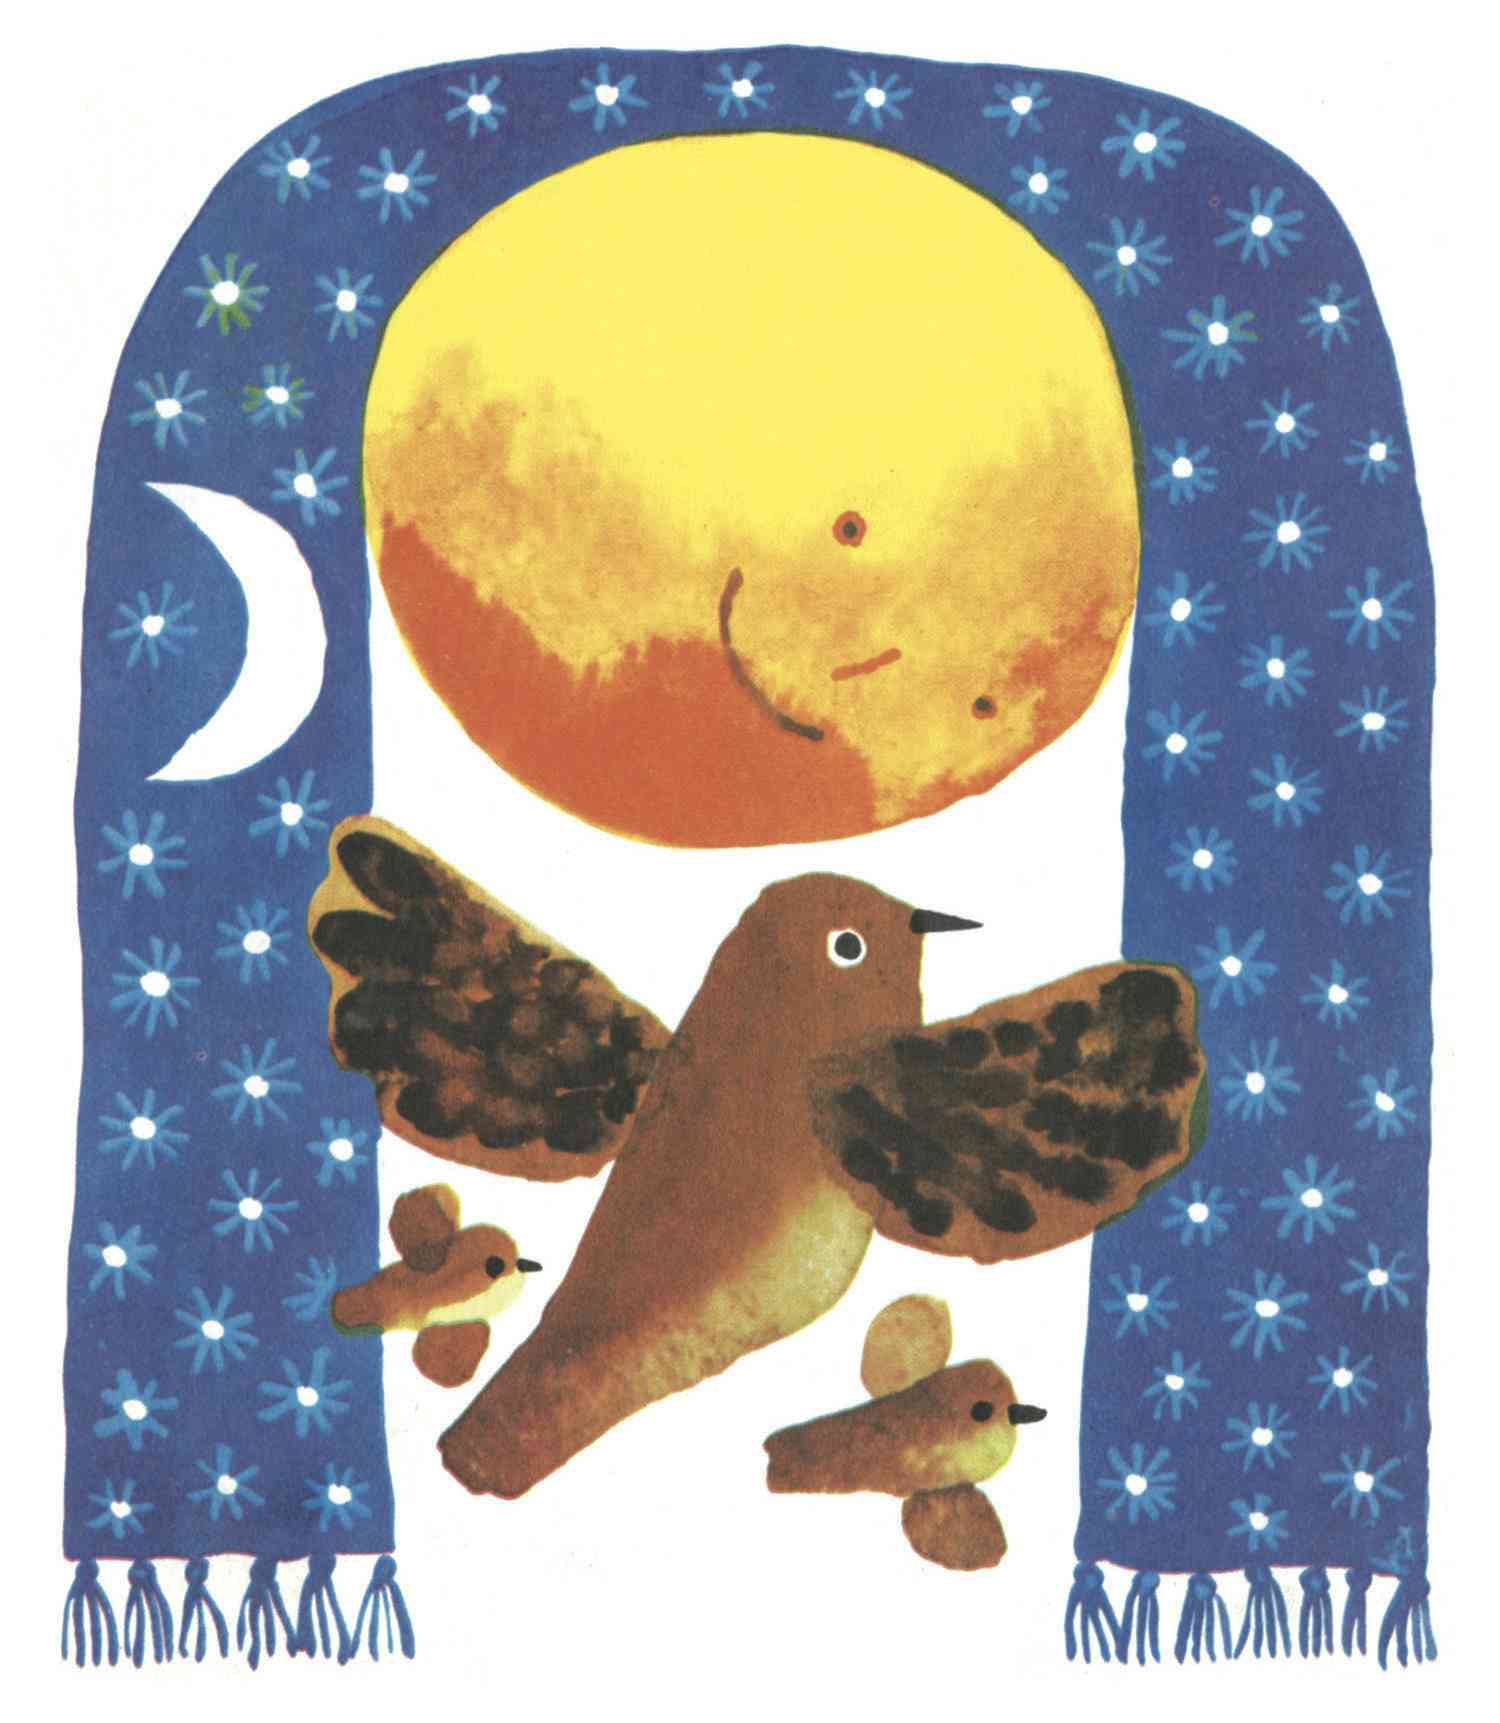 Children's illustration of sun, moon and birds